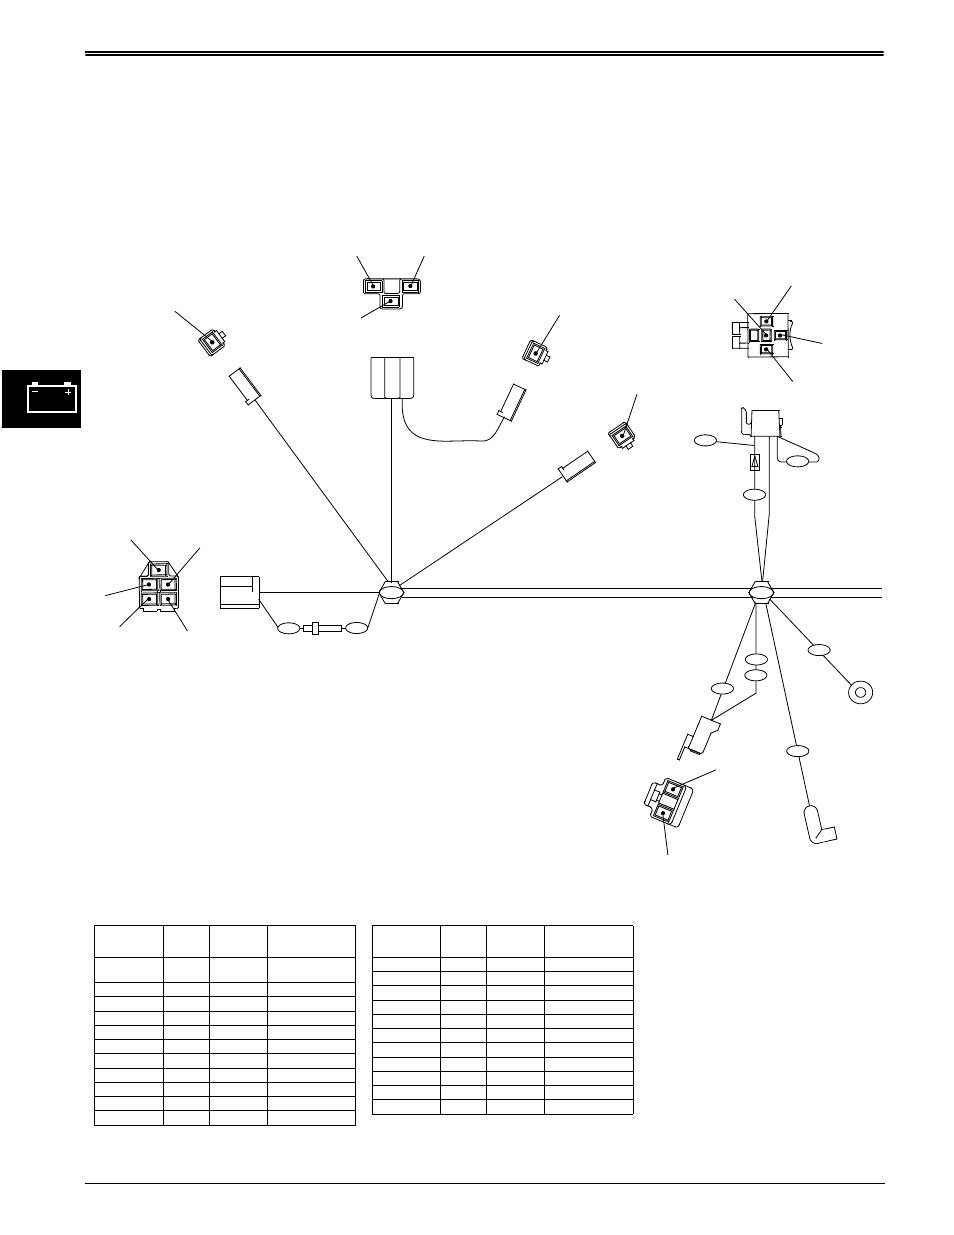 Wiring harness diagrams, Electrical | John Deere stx38 ... john deere stx38 wiring harness 